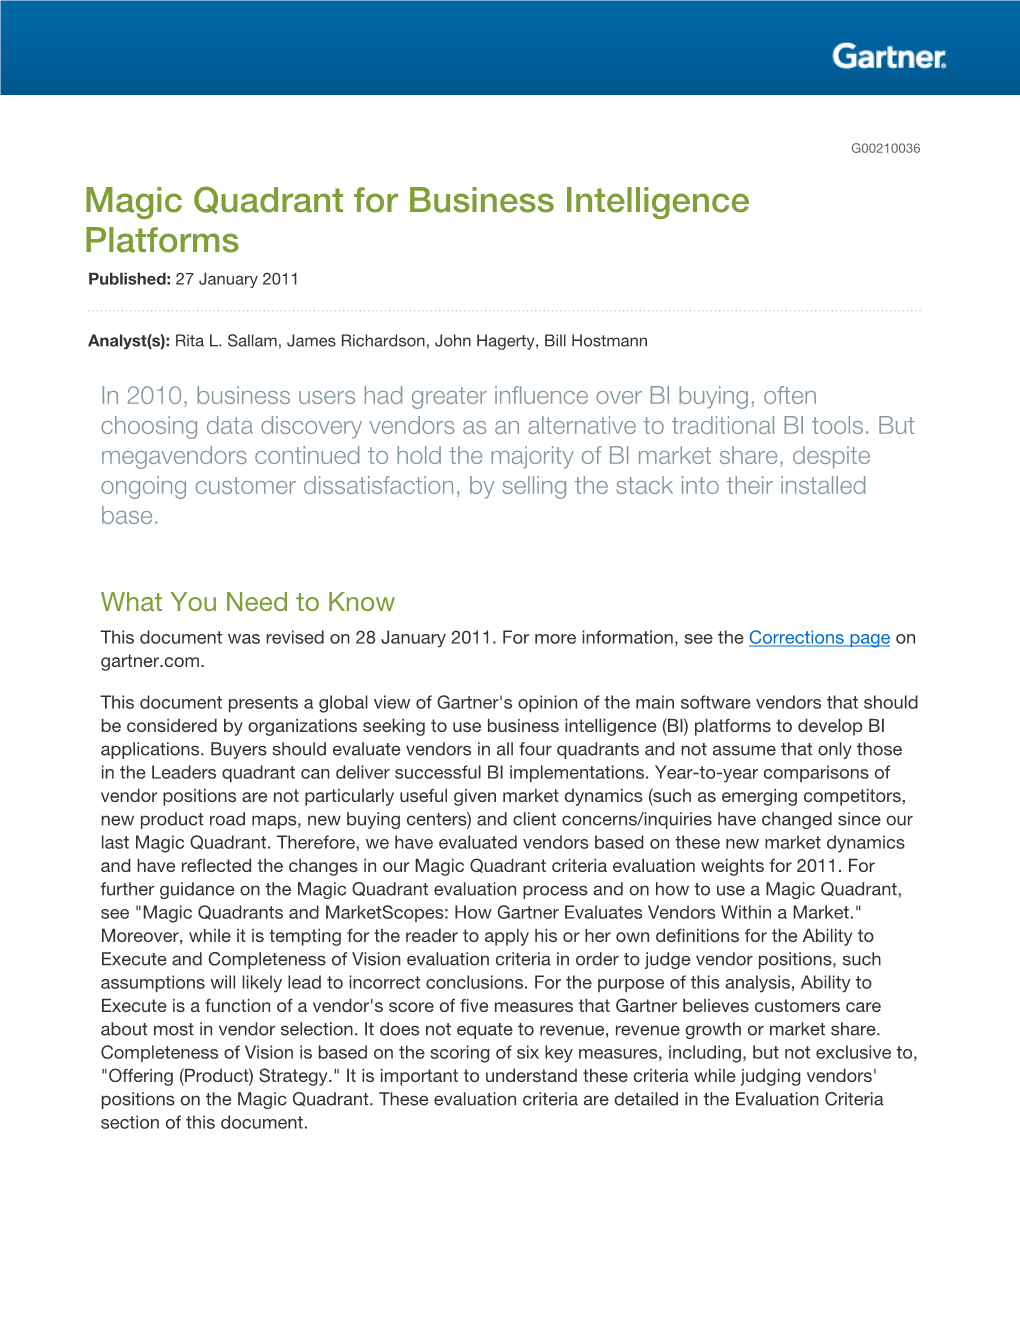 Magic Quadrant for Business Intelligence Platforms Published: 27 January 2011